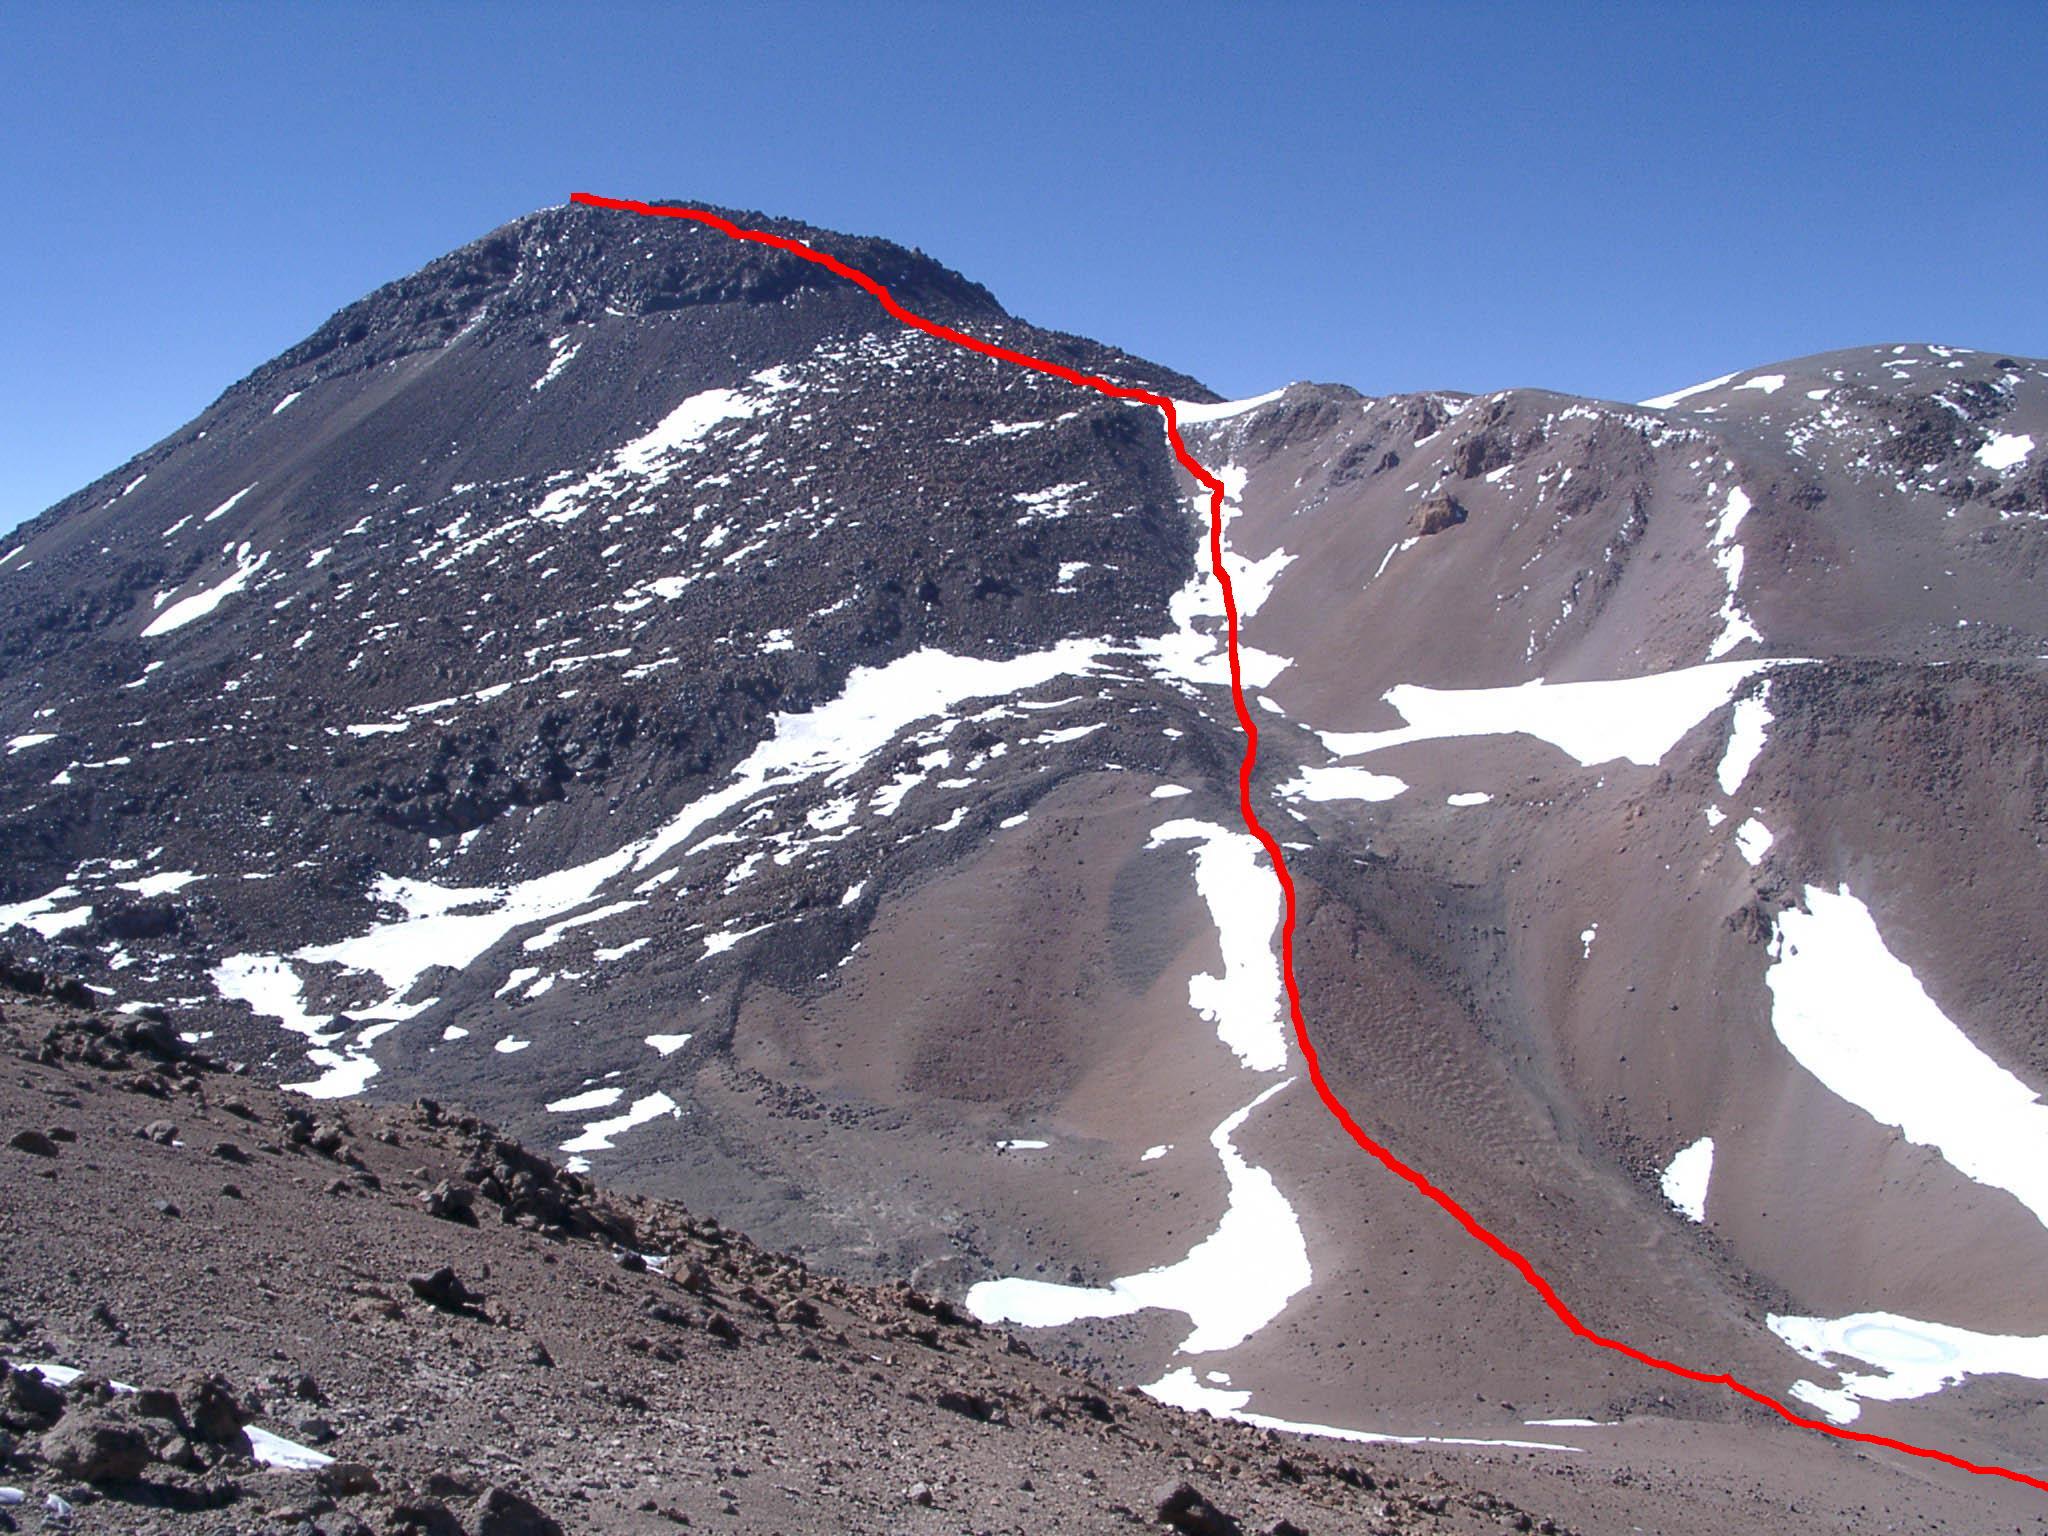 The Ascent of Cerro Tres Cruces Sur seen during the ascent of Cerro Tres Cruces Central. Image © Uwe Kraus